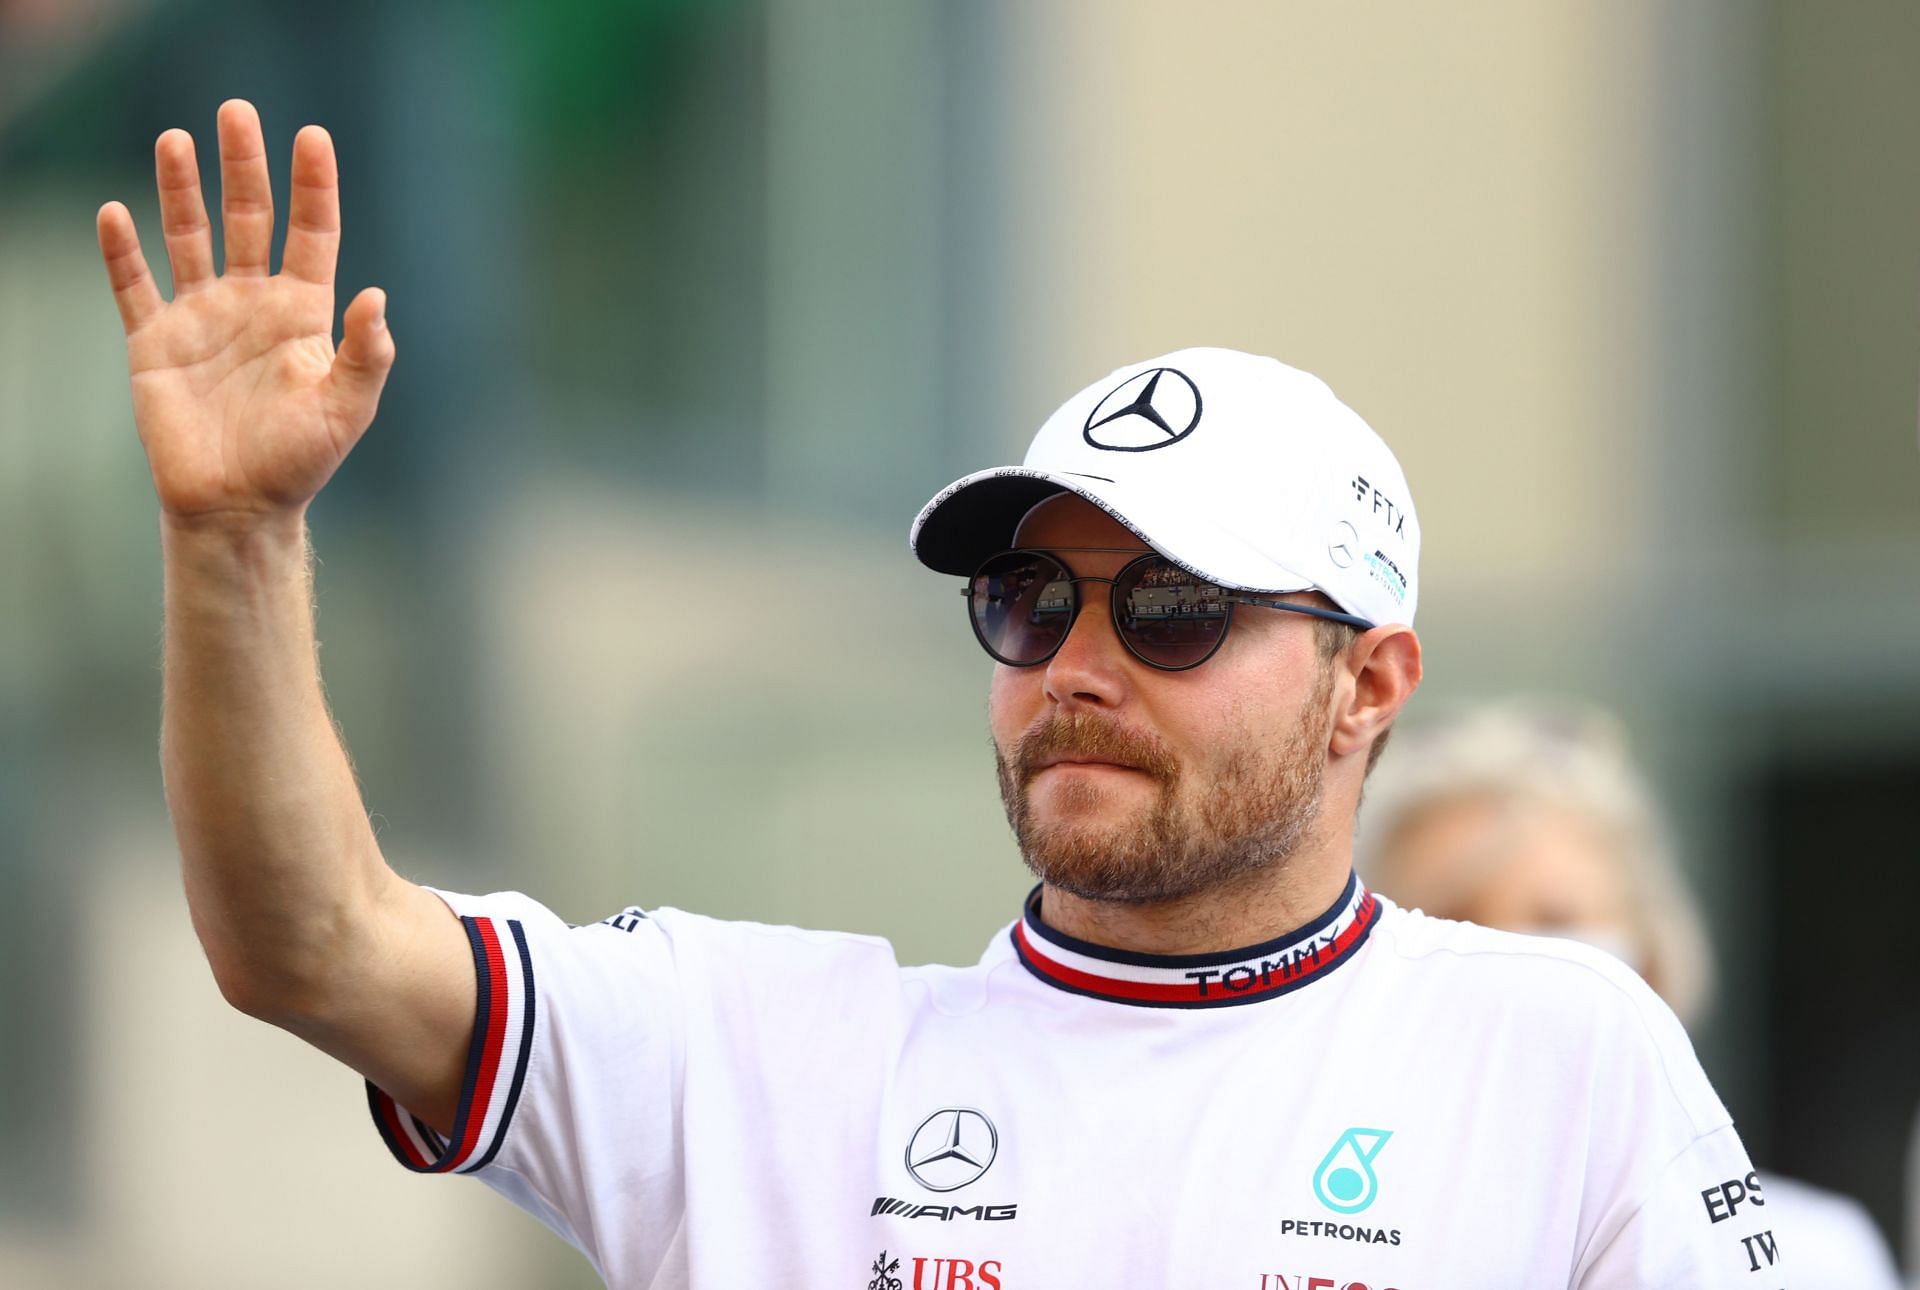 F1 Grand Prix of Abu Dhabi - Valtteri Bottas waves to his fans